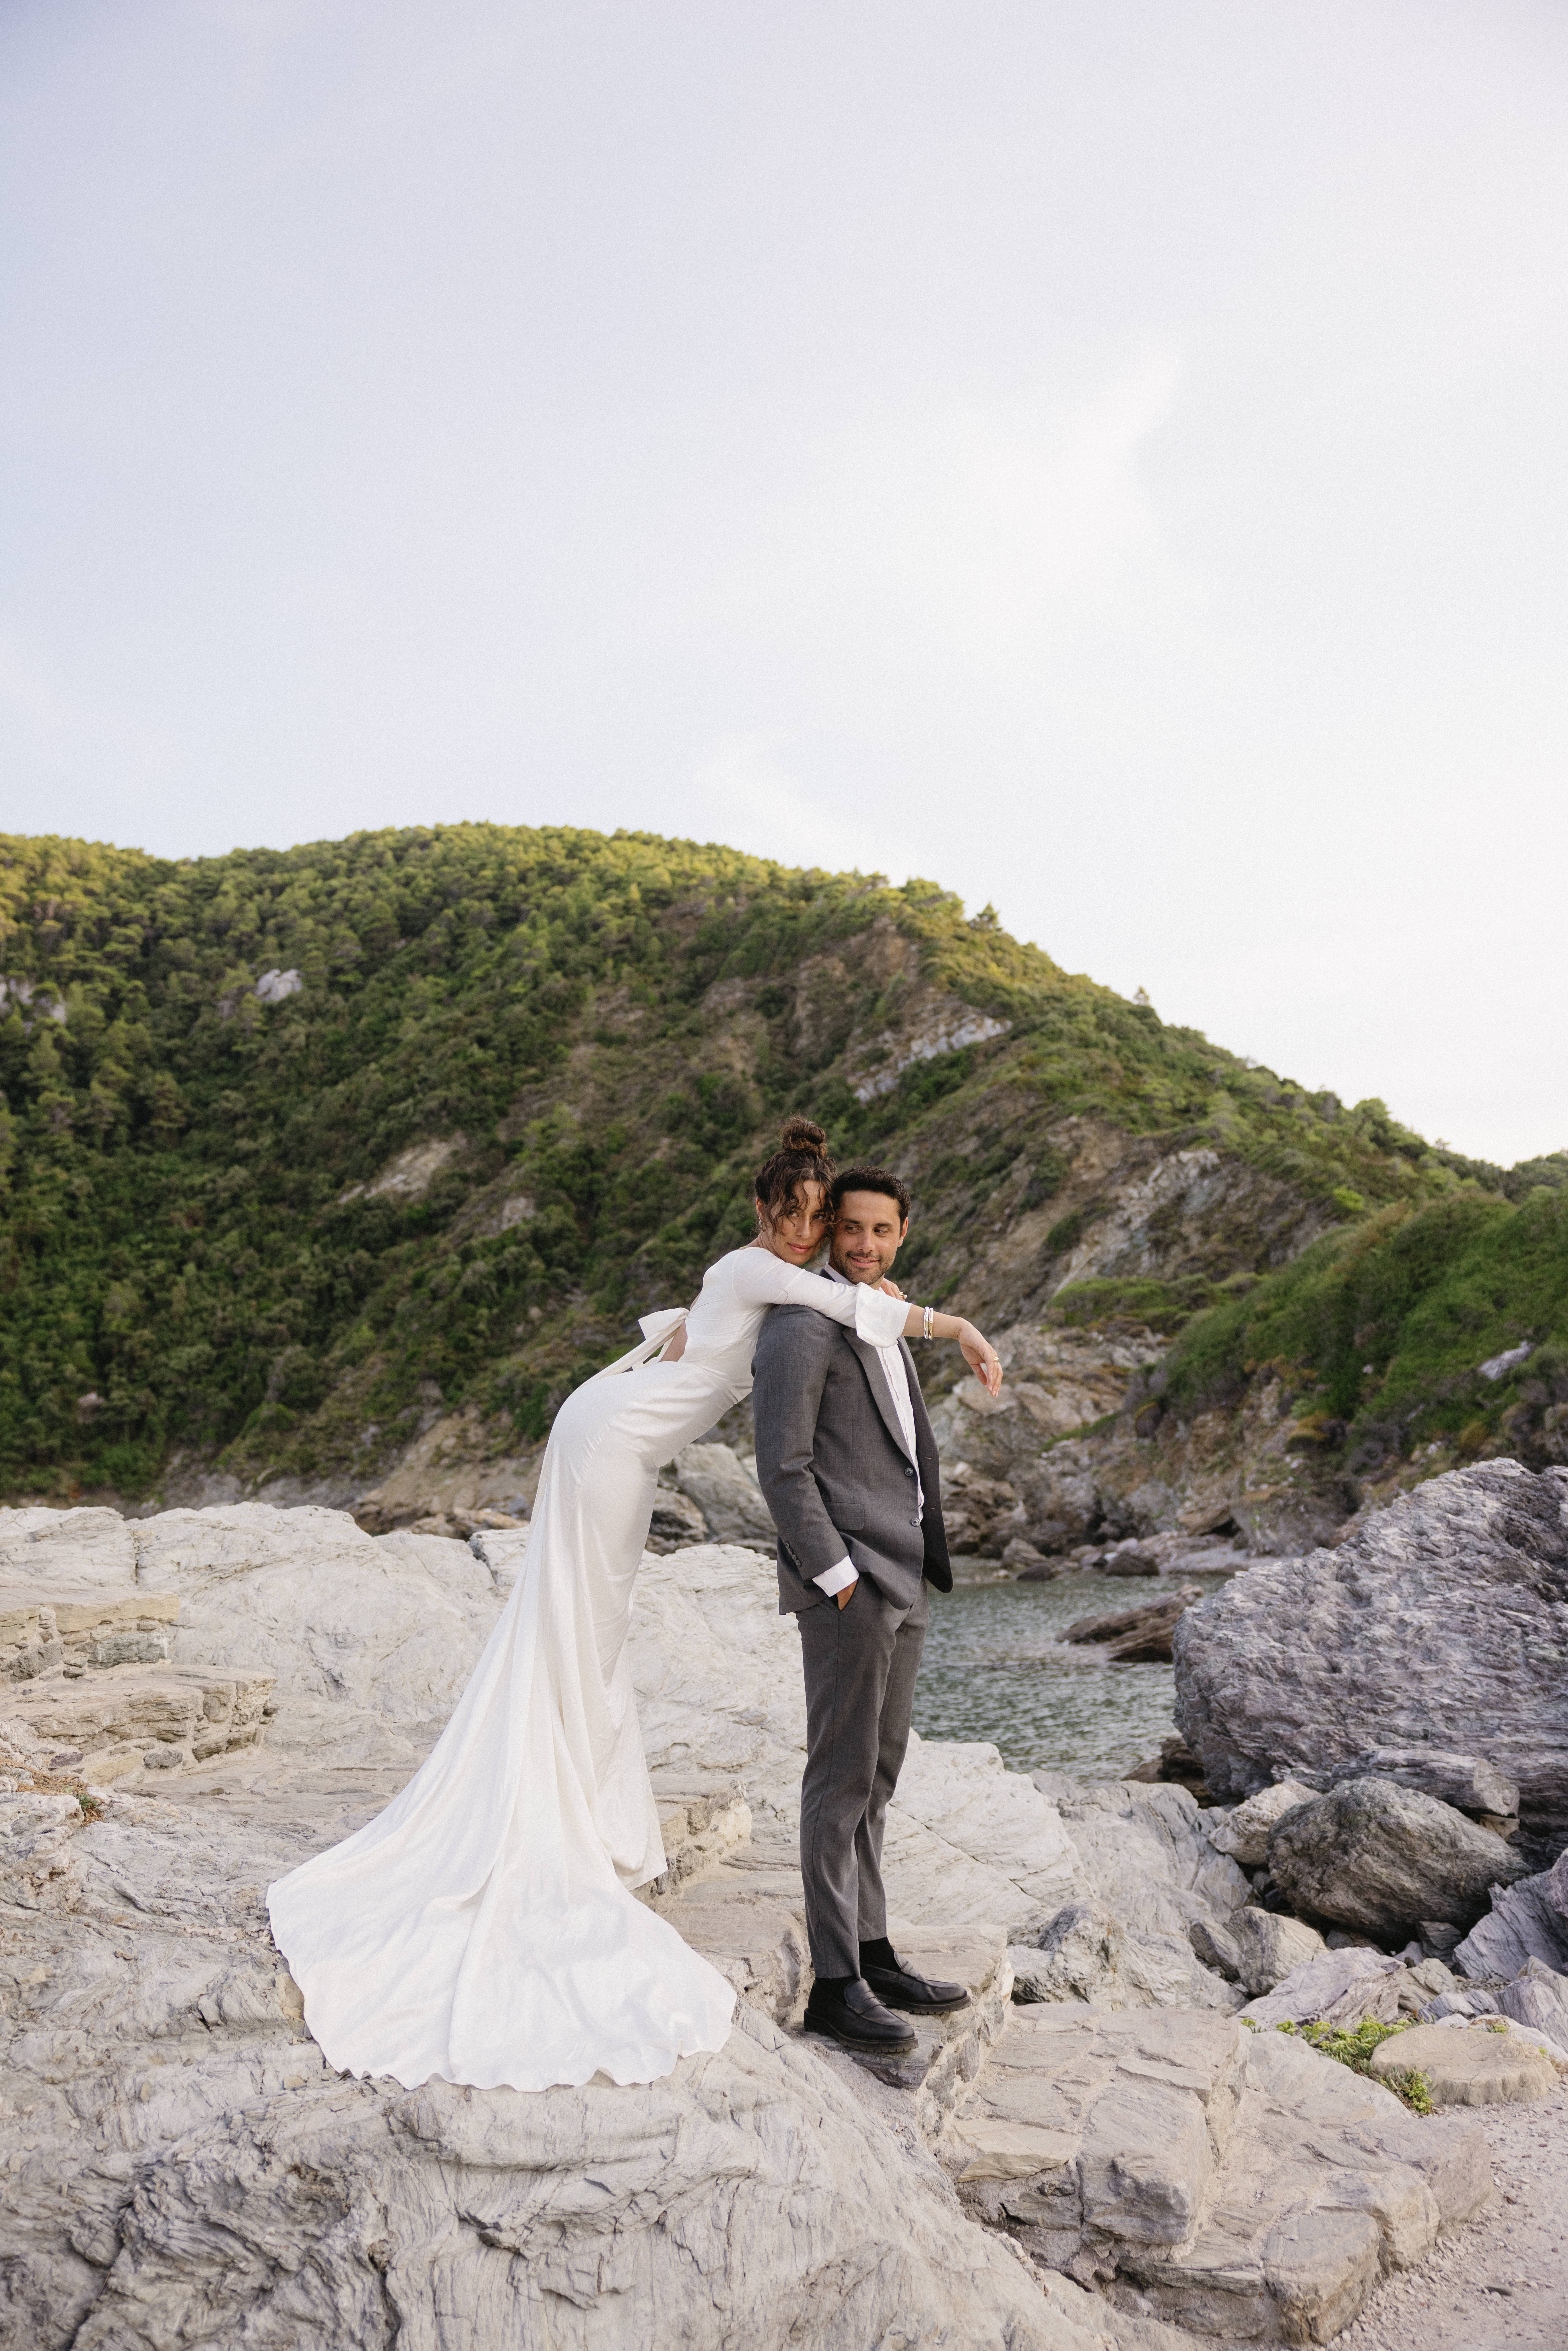 Couple getting eloped in Skopelos Greece by the sea